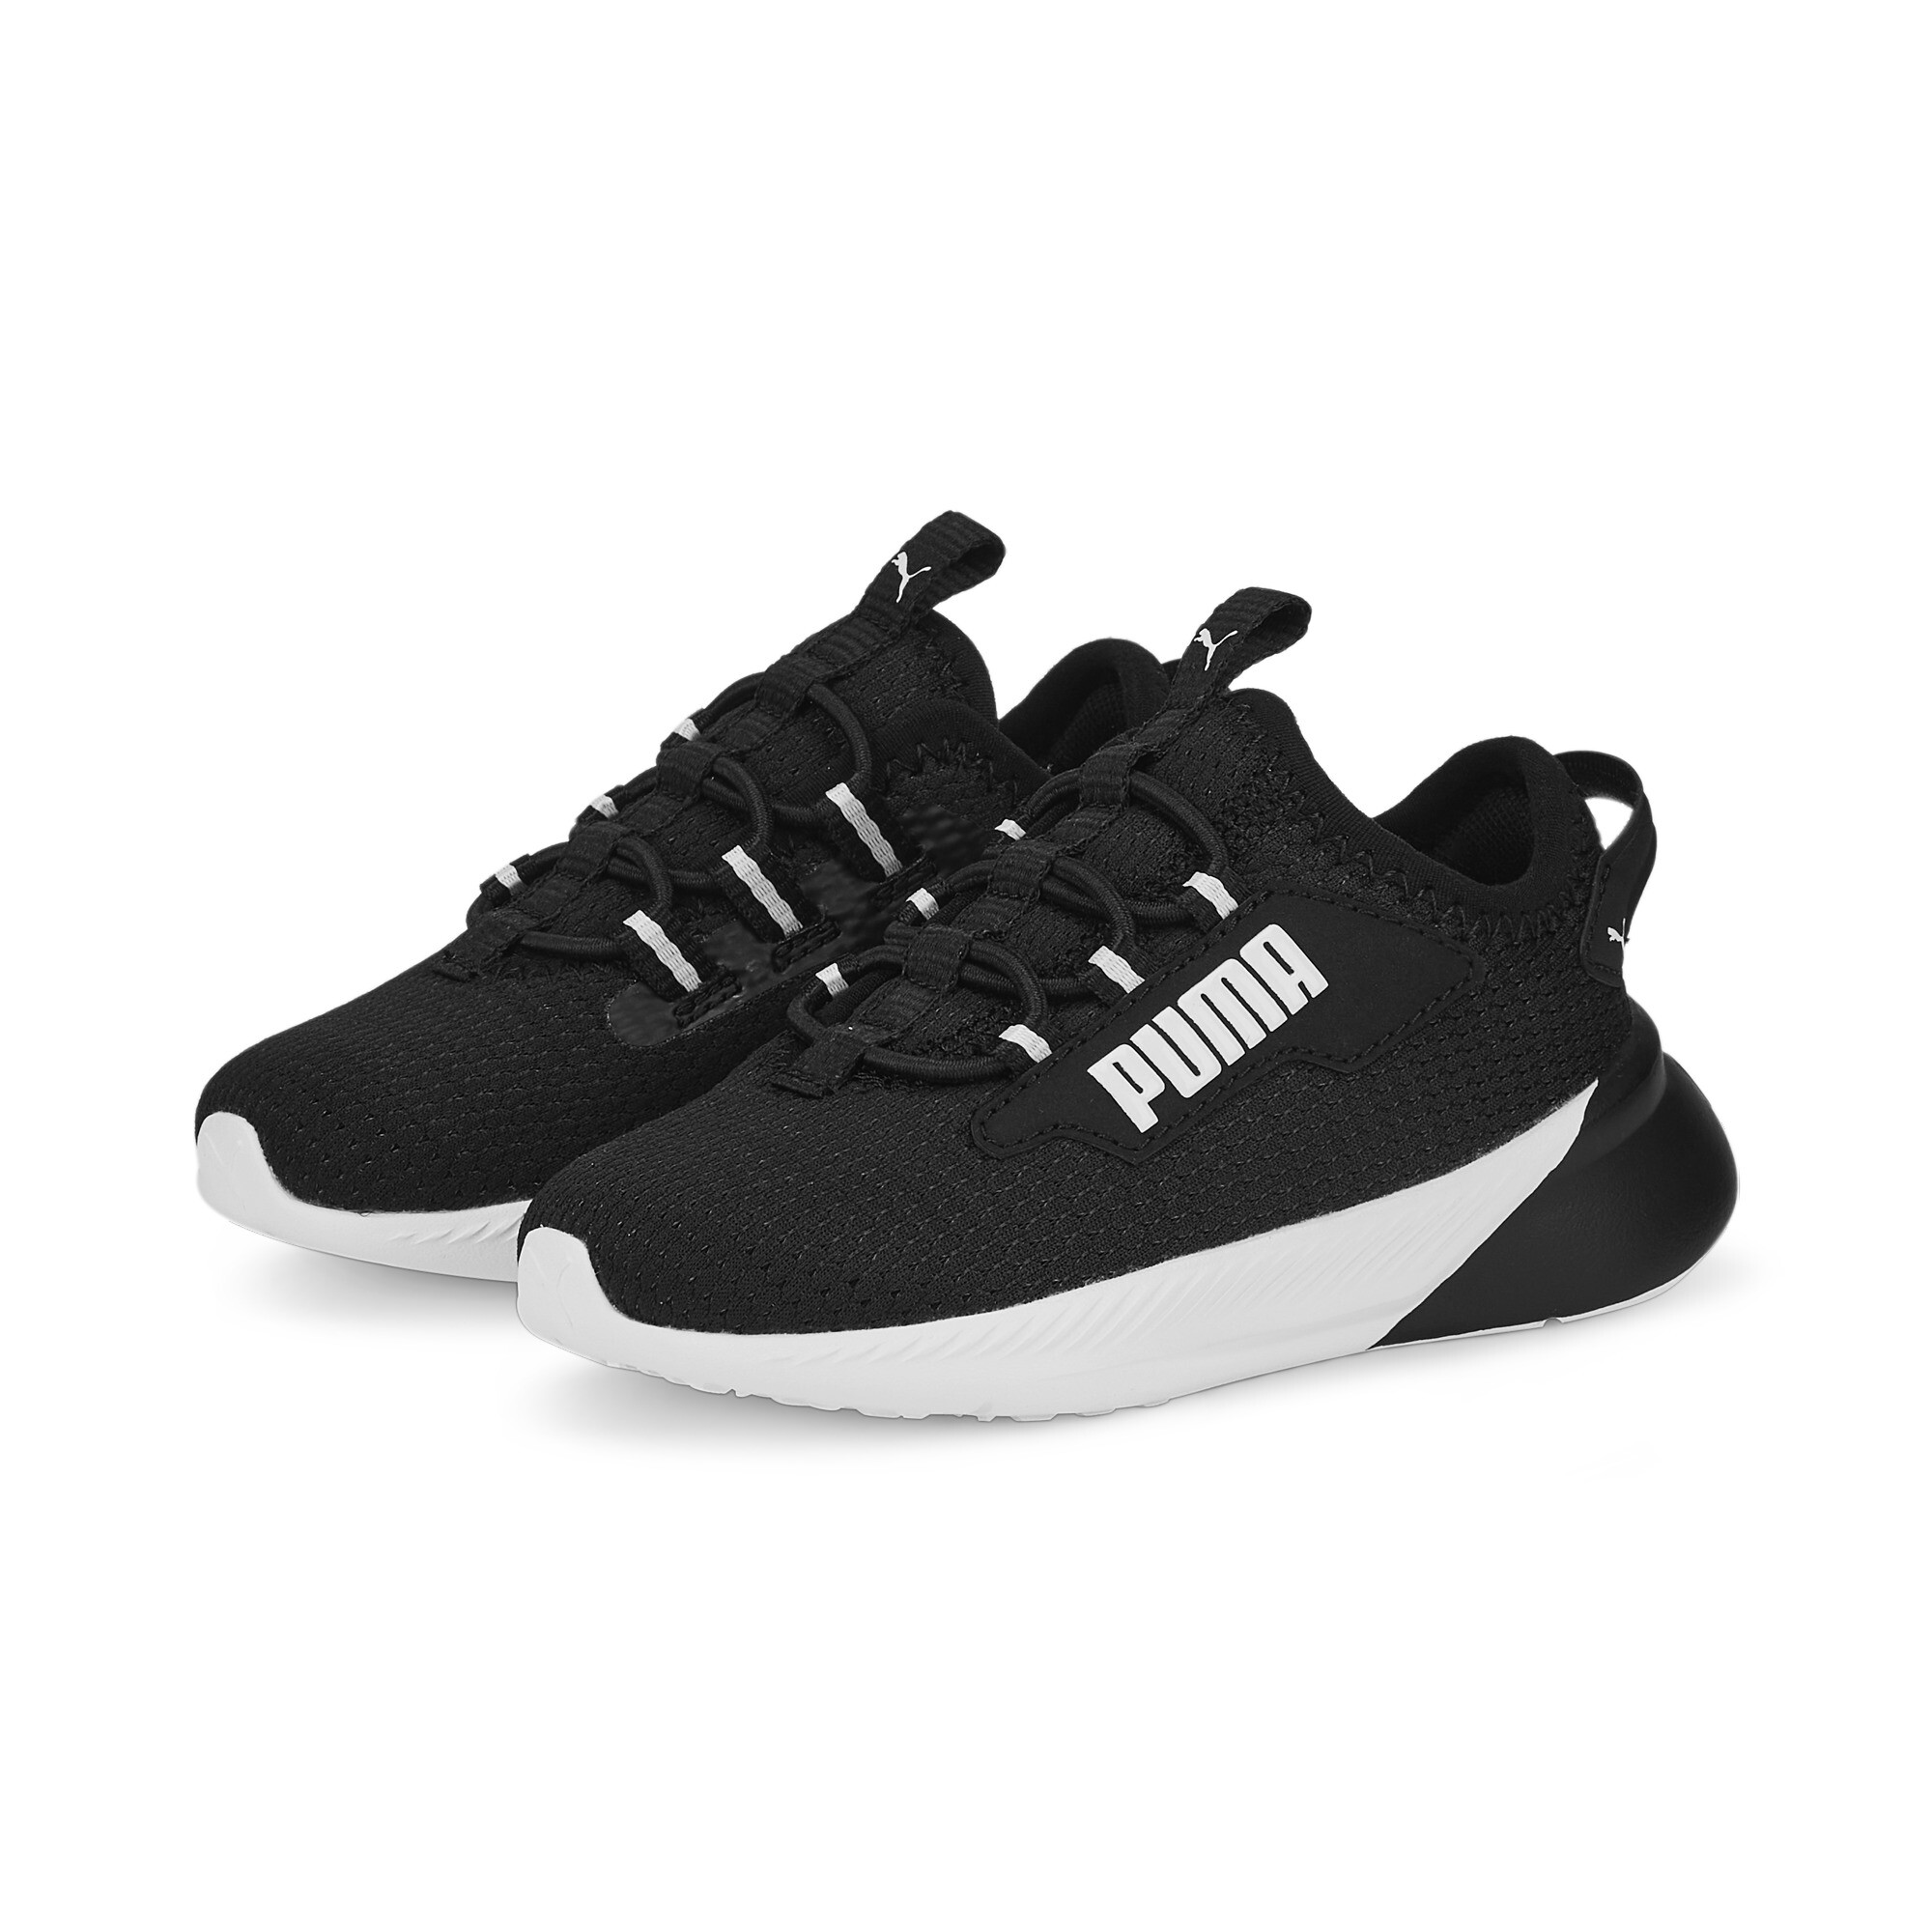 Puma Retaliate 2 AC Sneakers Babies, Black, Size 23, Shoes